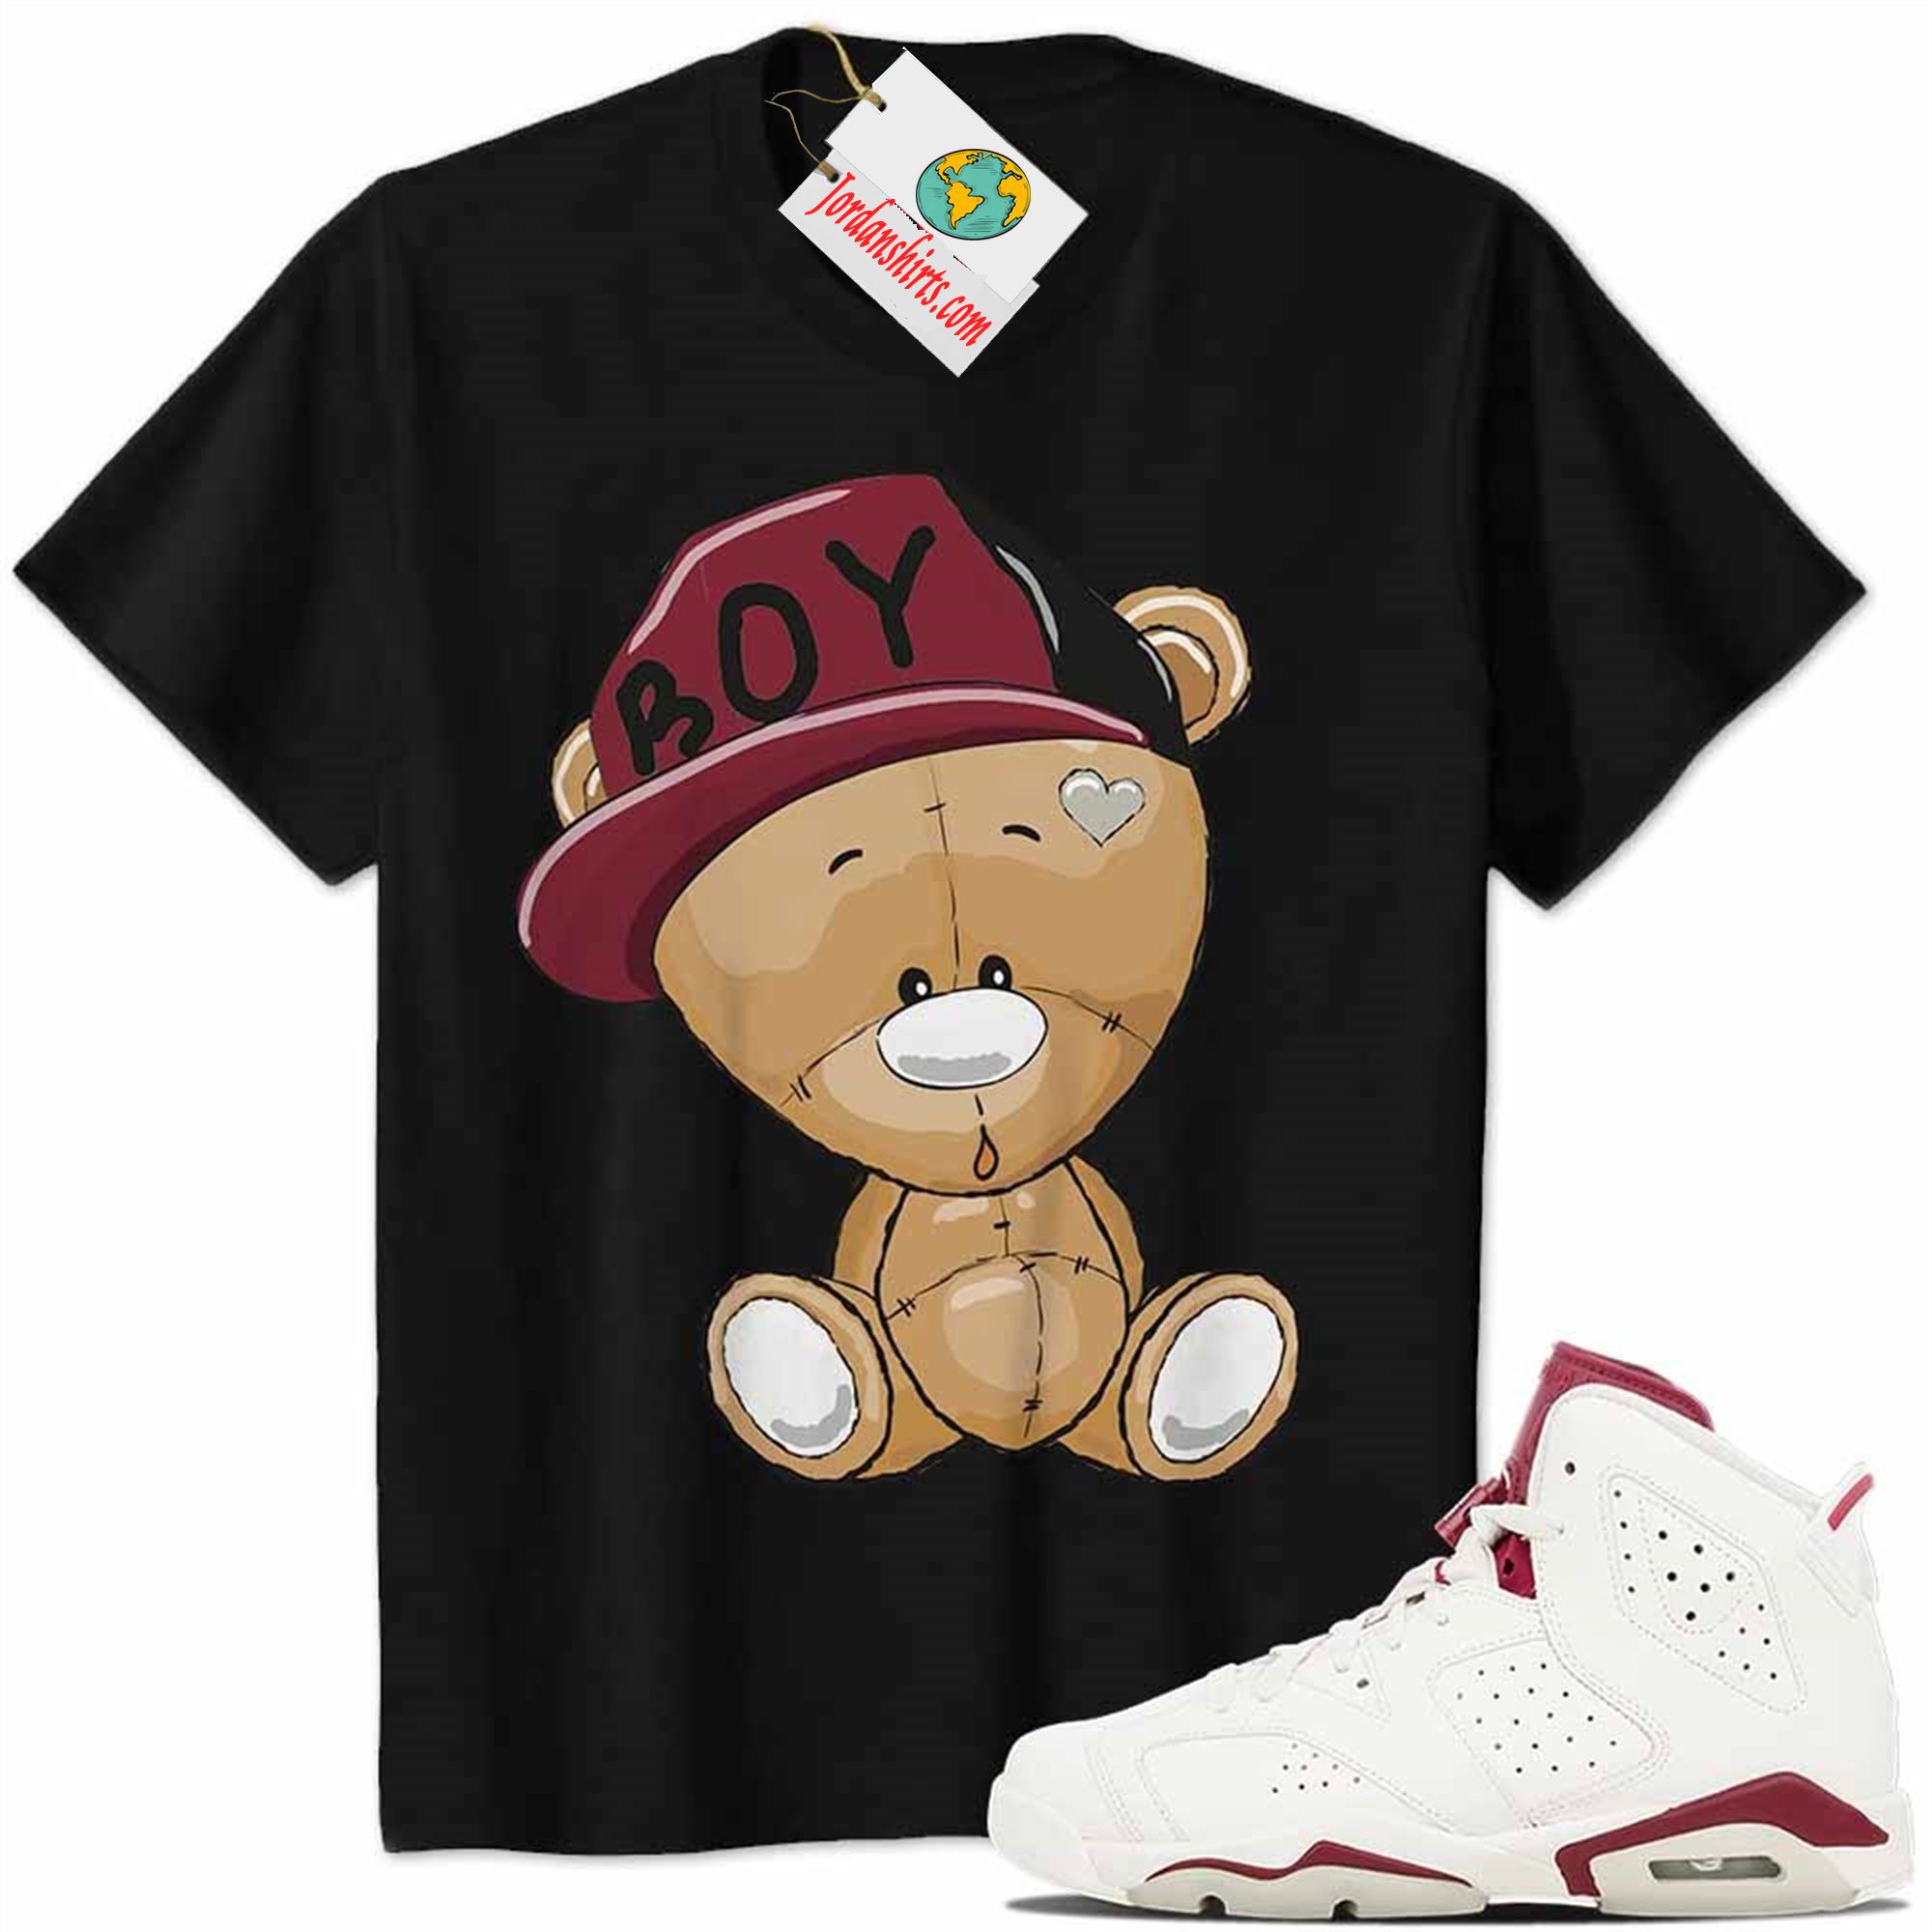 Jordan 6 Shirt, Jordan 6 Maroon Shirt Cute Baby Teddy Bear Black Size Up To 5xl